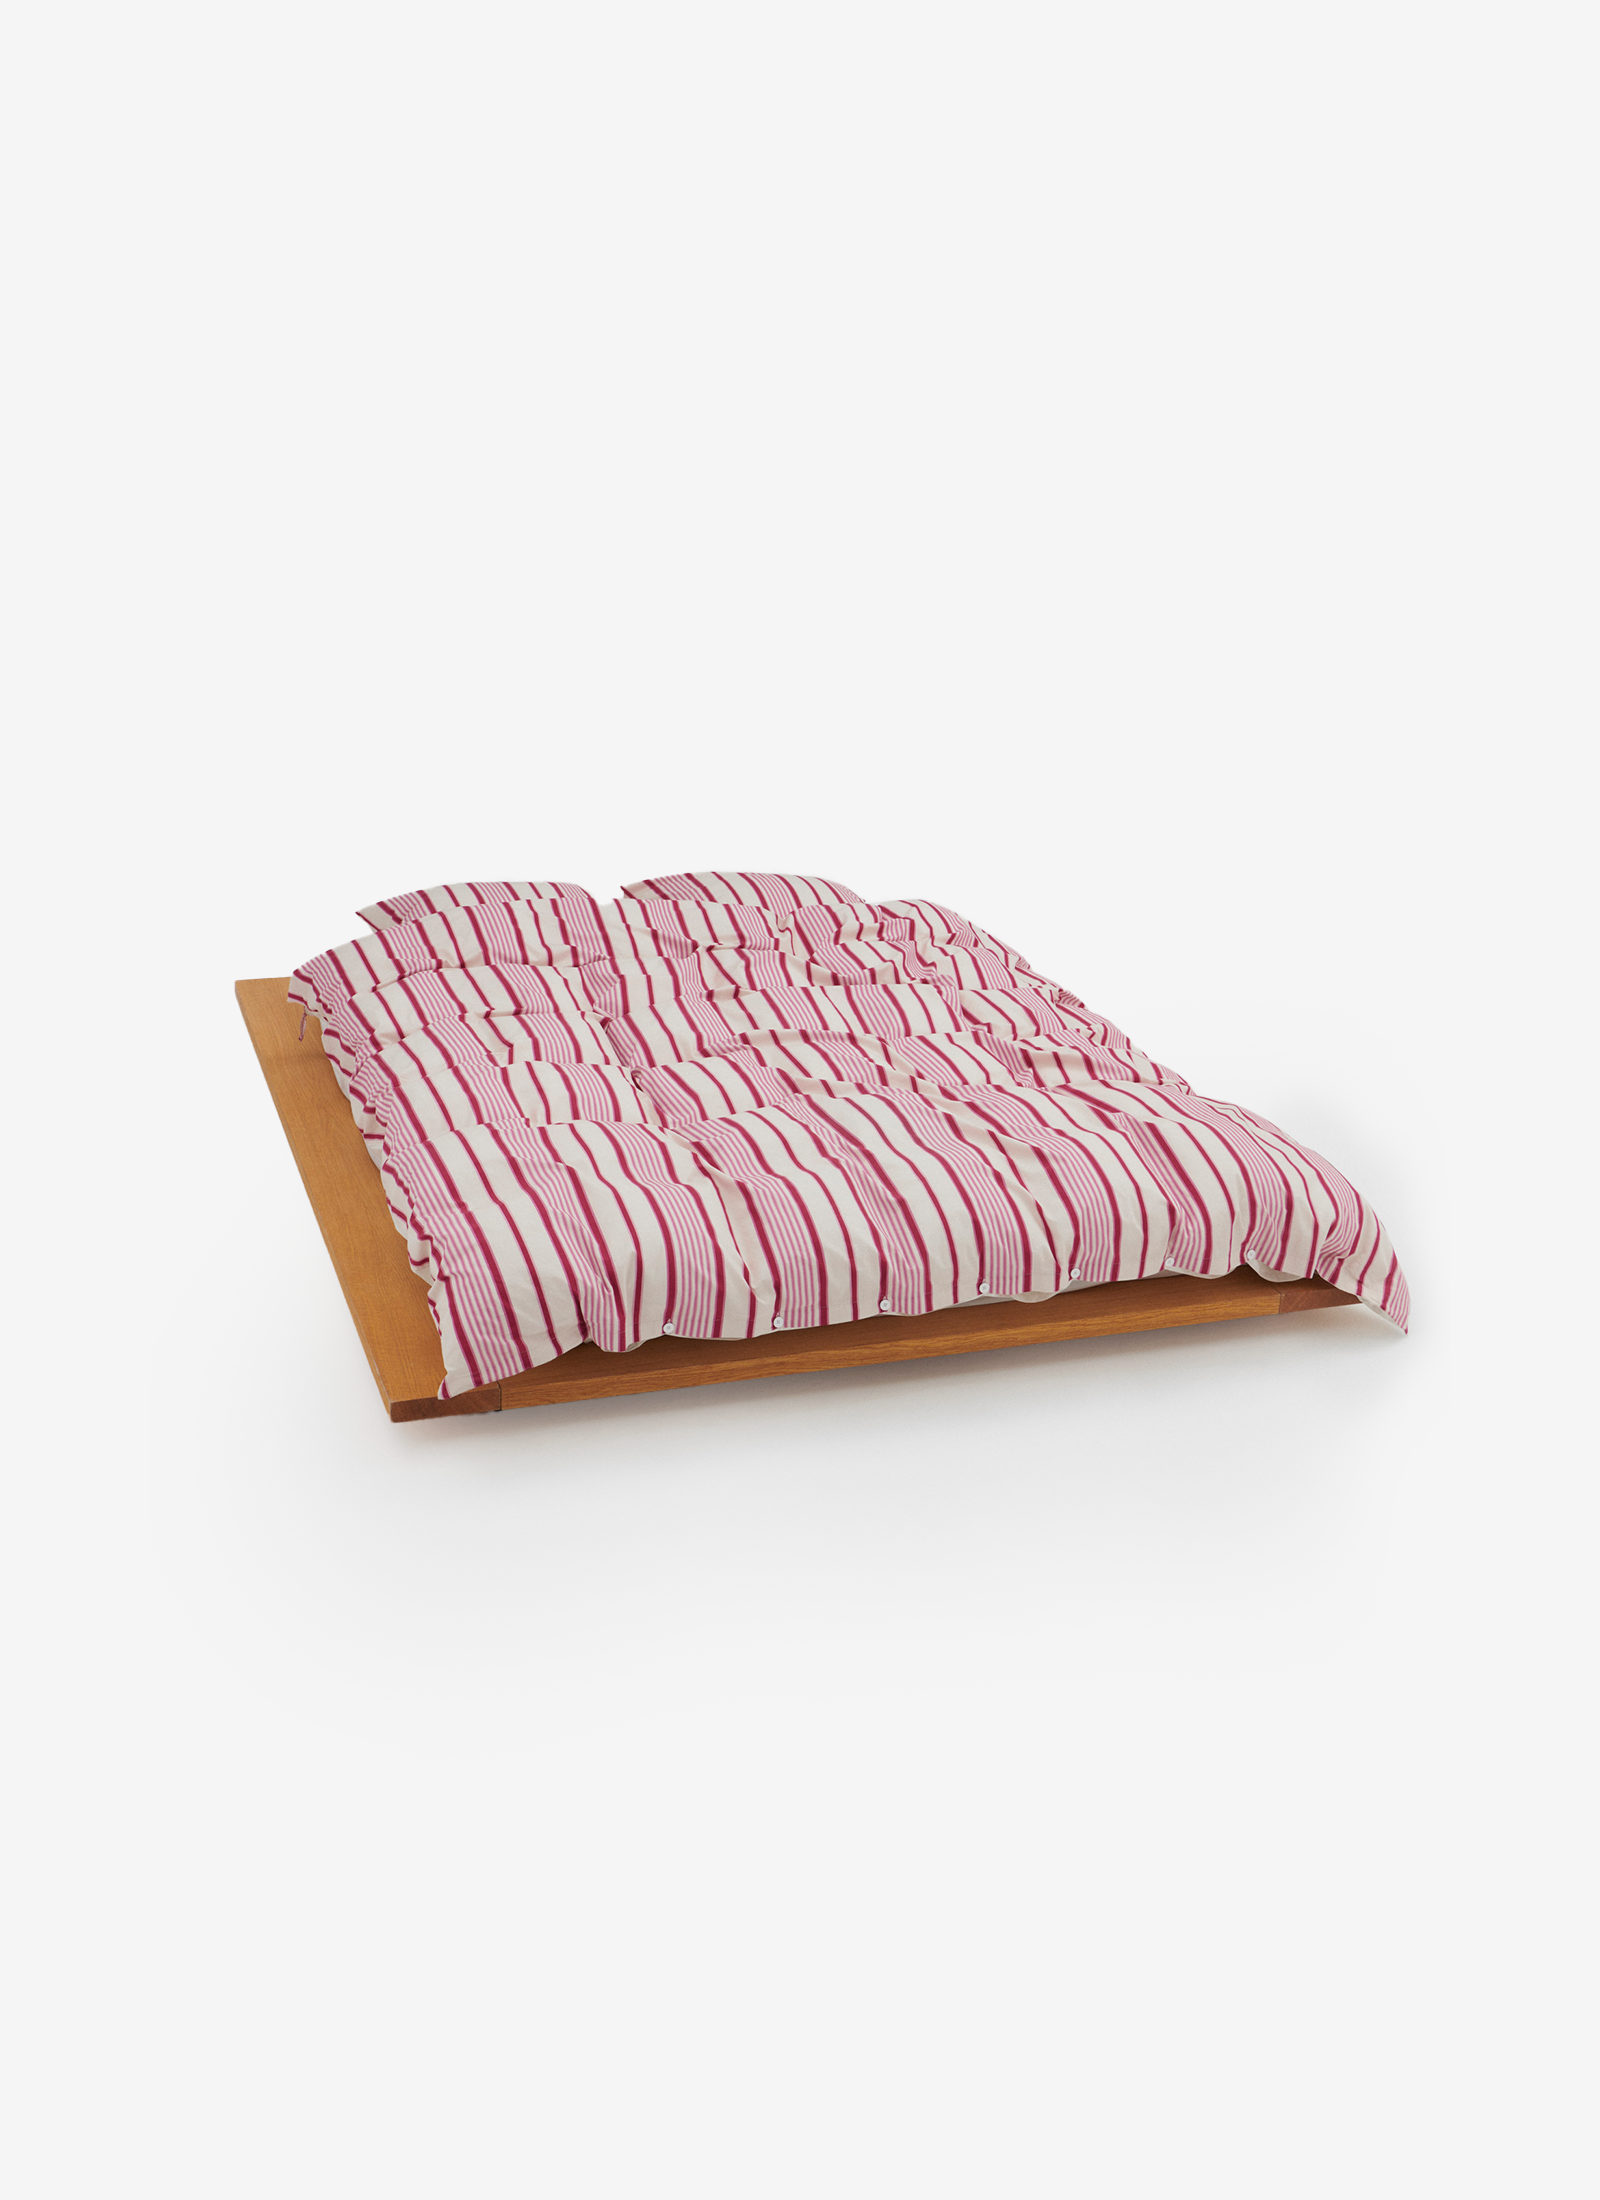 Duvet Cover in Pink Mattress Stripes